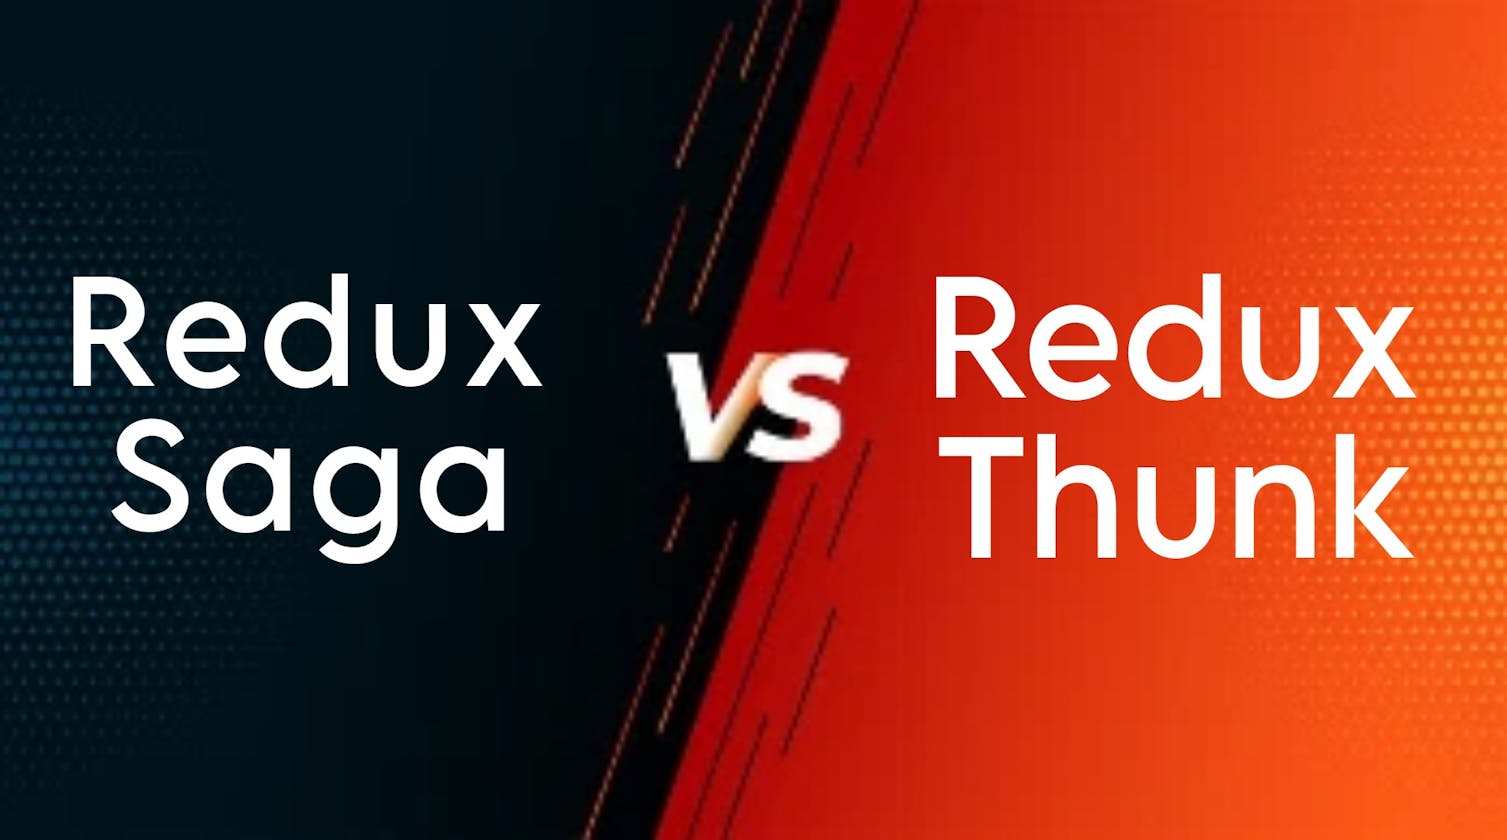 Advantages of Redux Saga over Redux Thunk